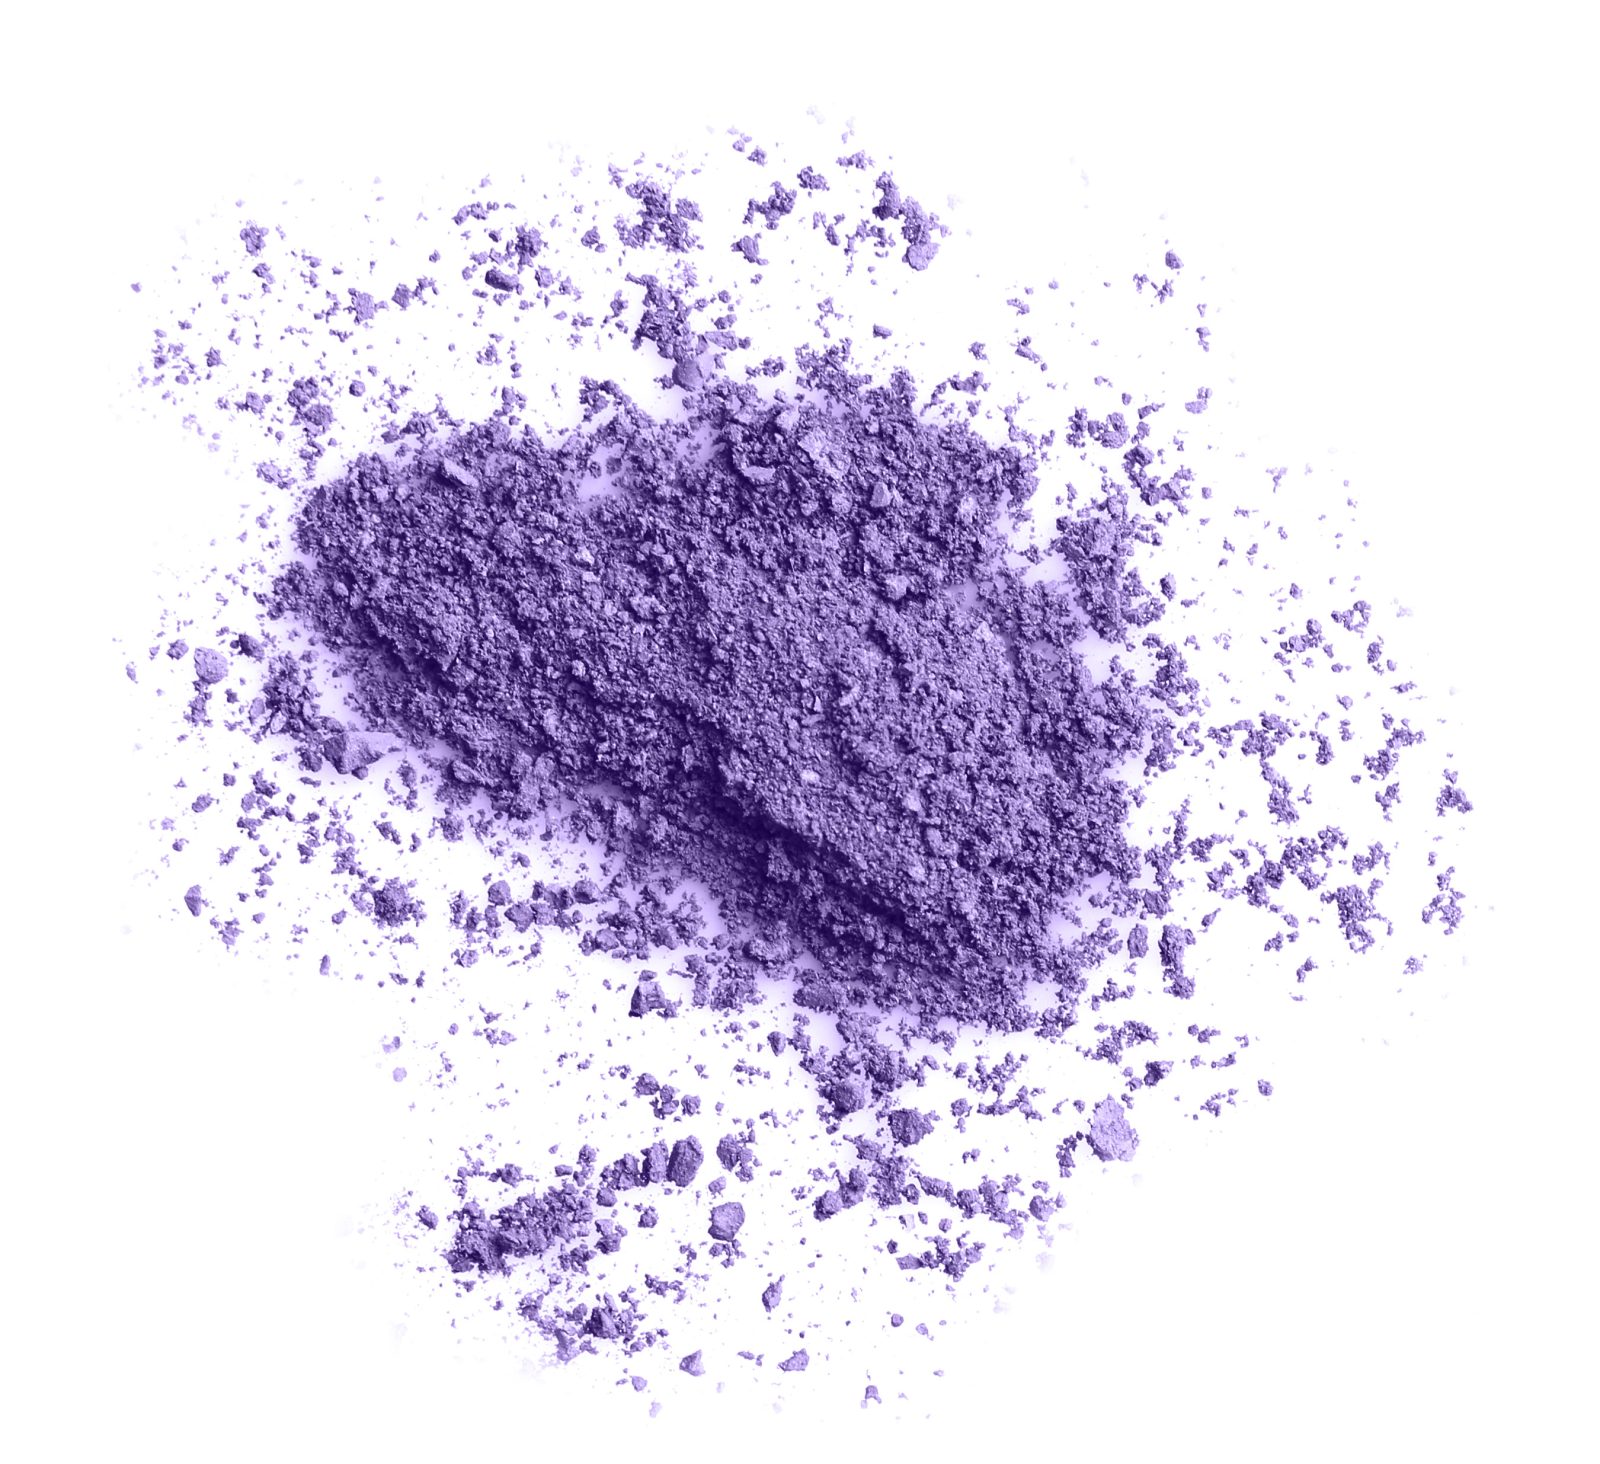 Warning about purple heroin